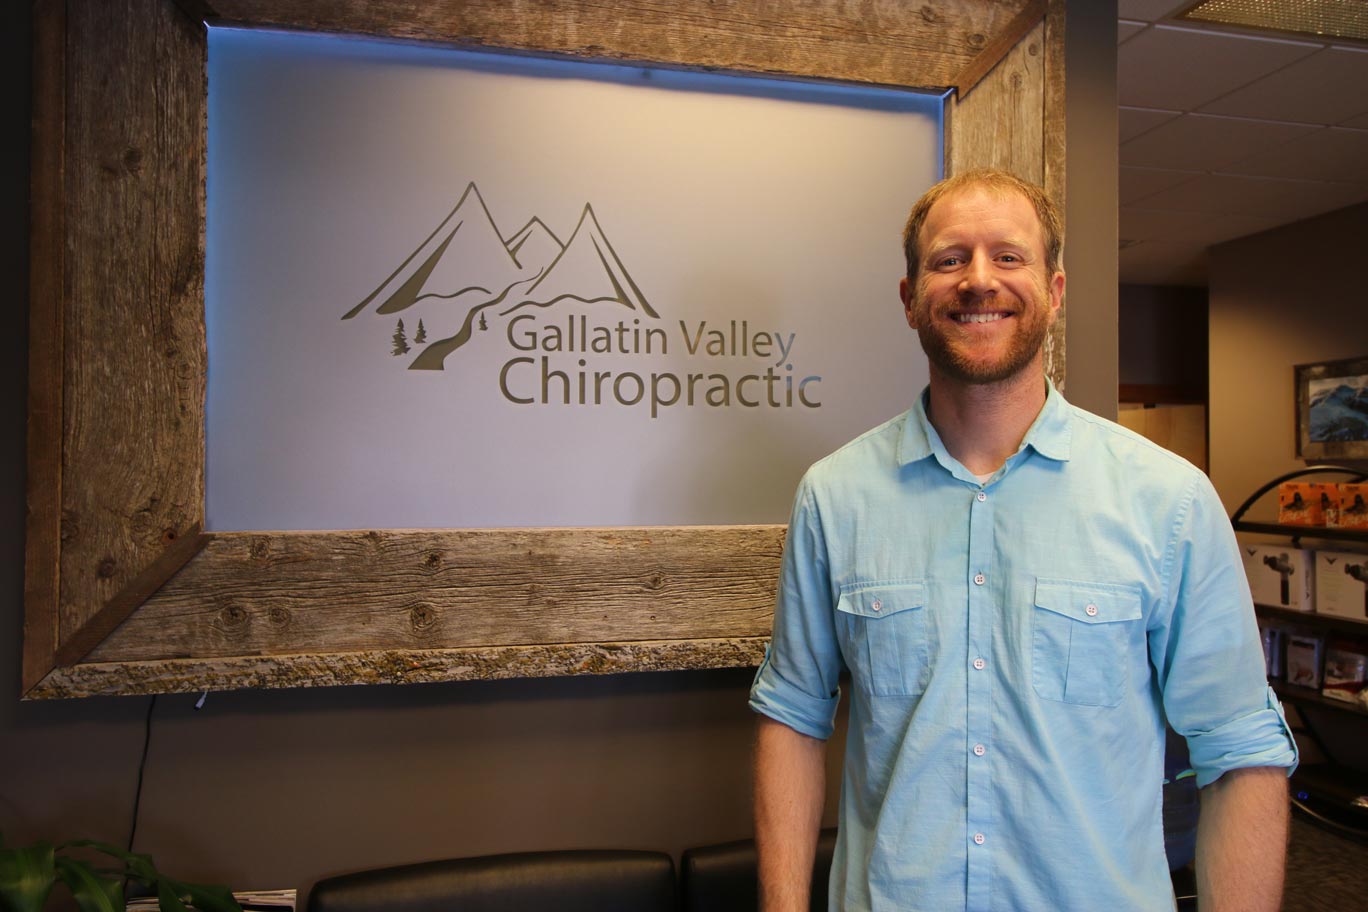 CHIROPRACTIC Full Spine ADJUSTMENT - Chiropractor in Bozeman Montana @Pro  Chiropractic - YouTube